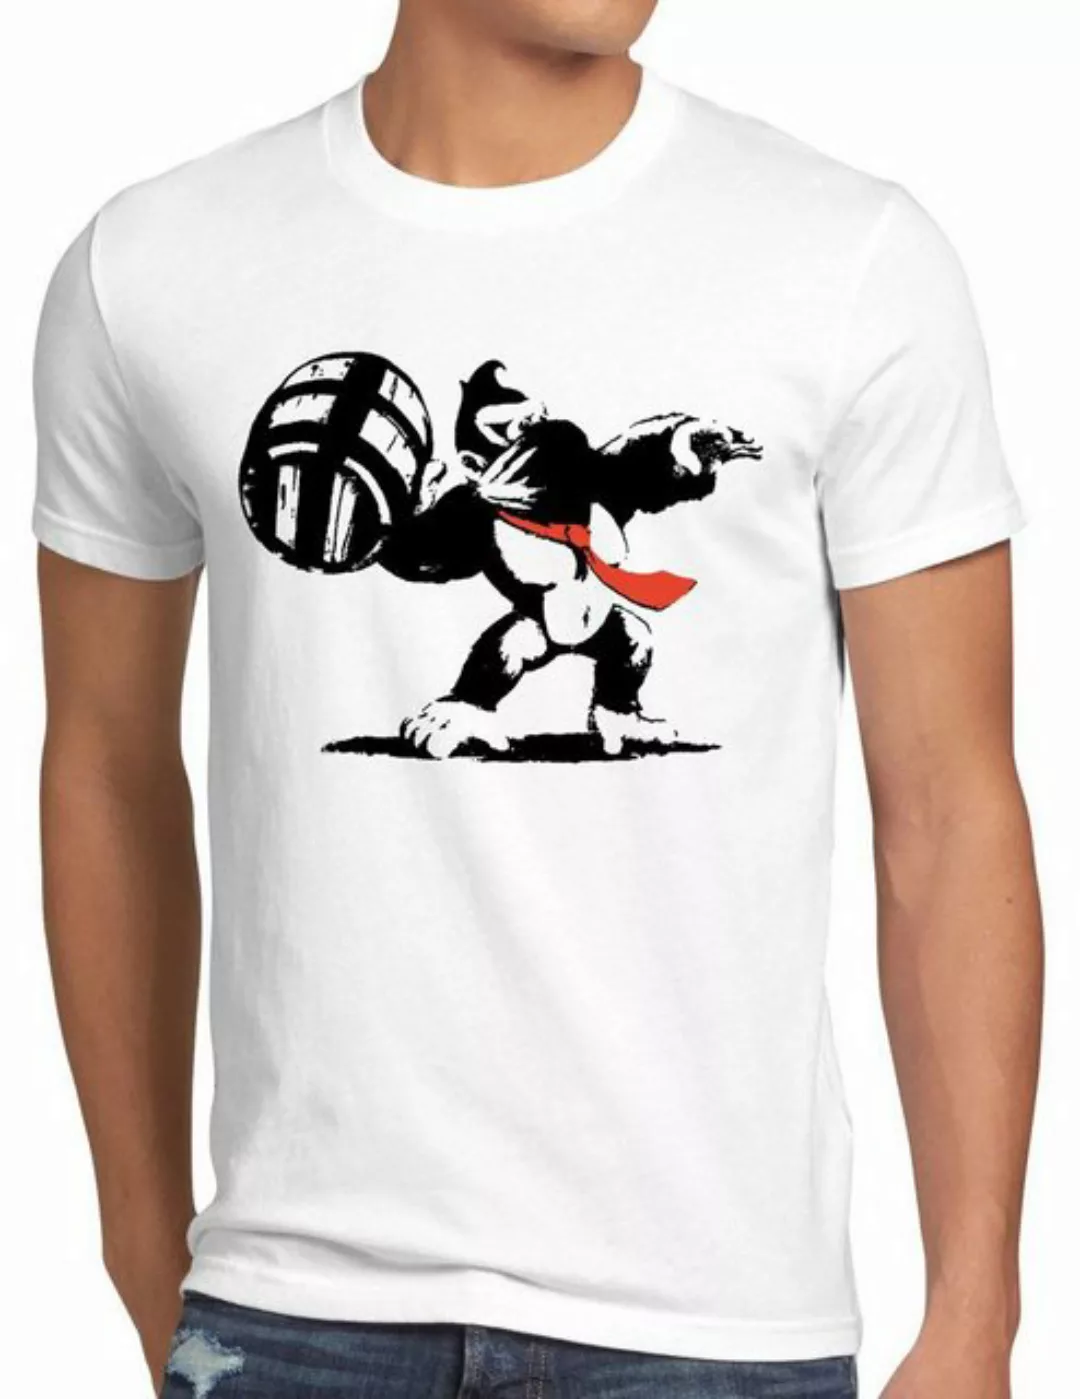 style3 Print-Shirt Herren T-Shirt Graffiti Kong donkey banksy geek snes ner günstig online kaufen